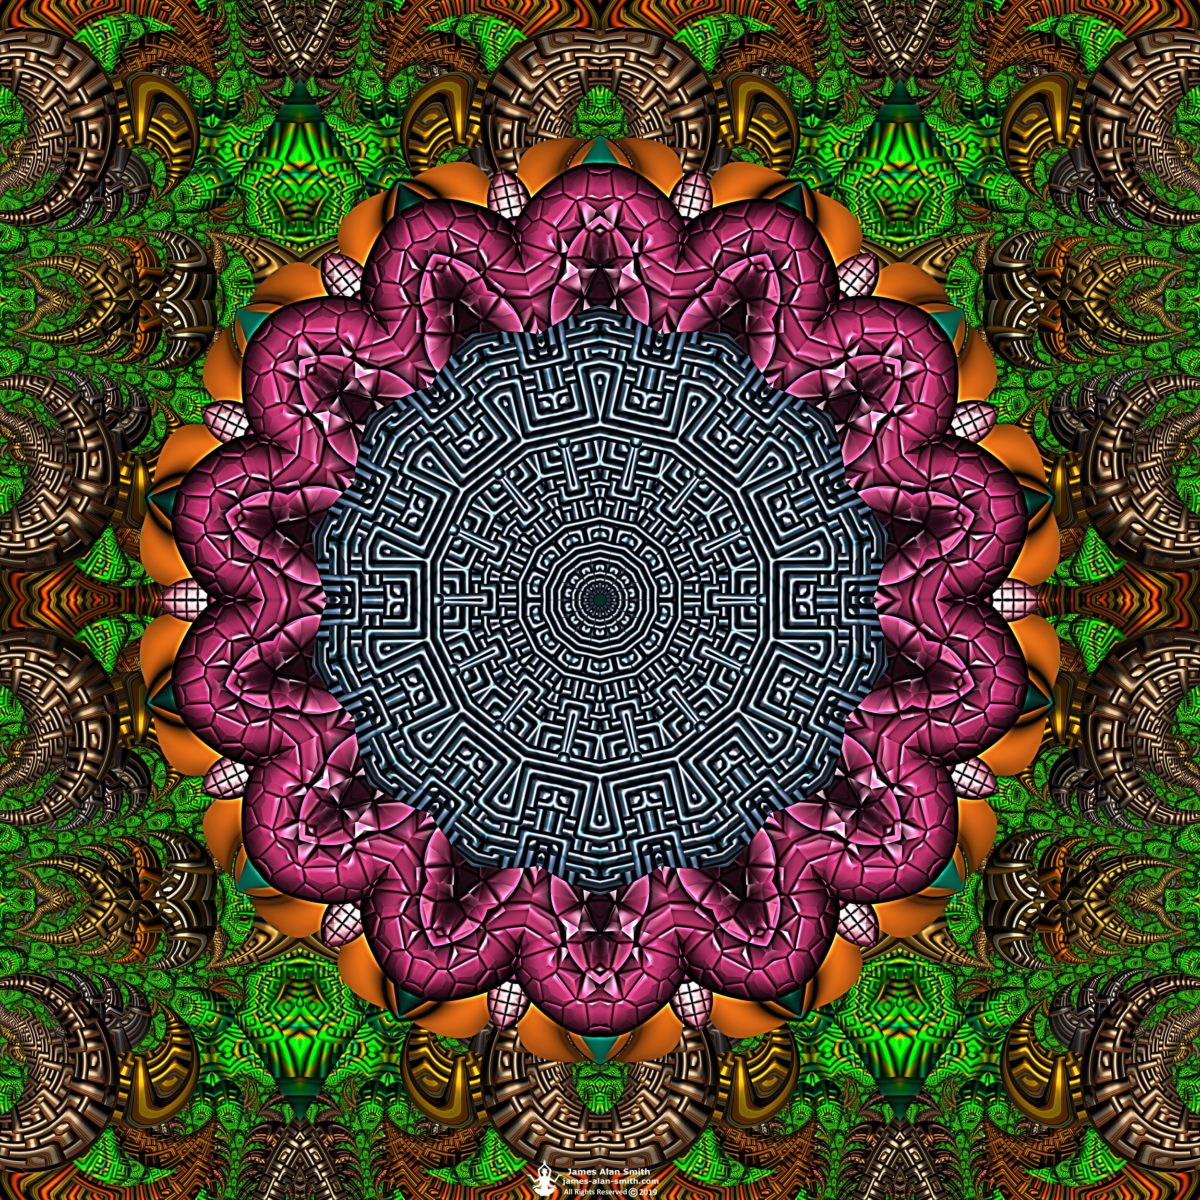 Mayan Metamorphosis Mandala by James Alan Smith